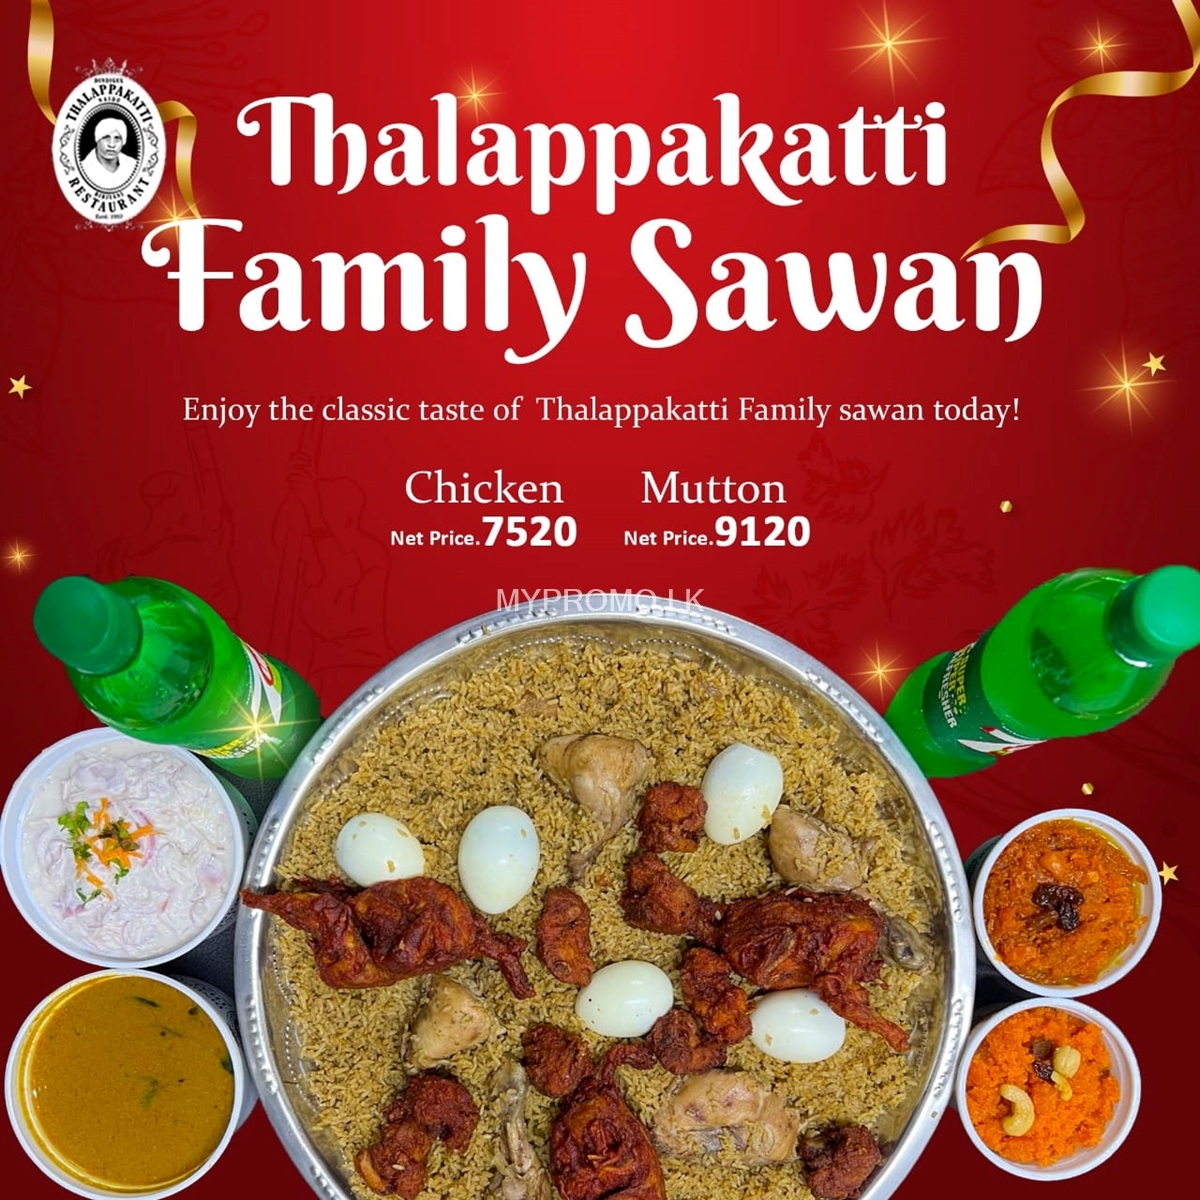 Thalappakatti Family Savan Biriyani - Chicken and Mutton